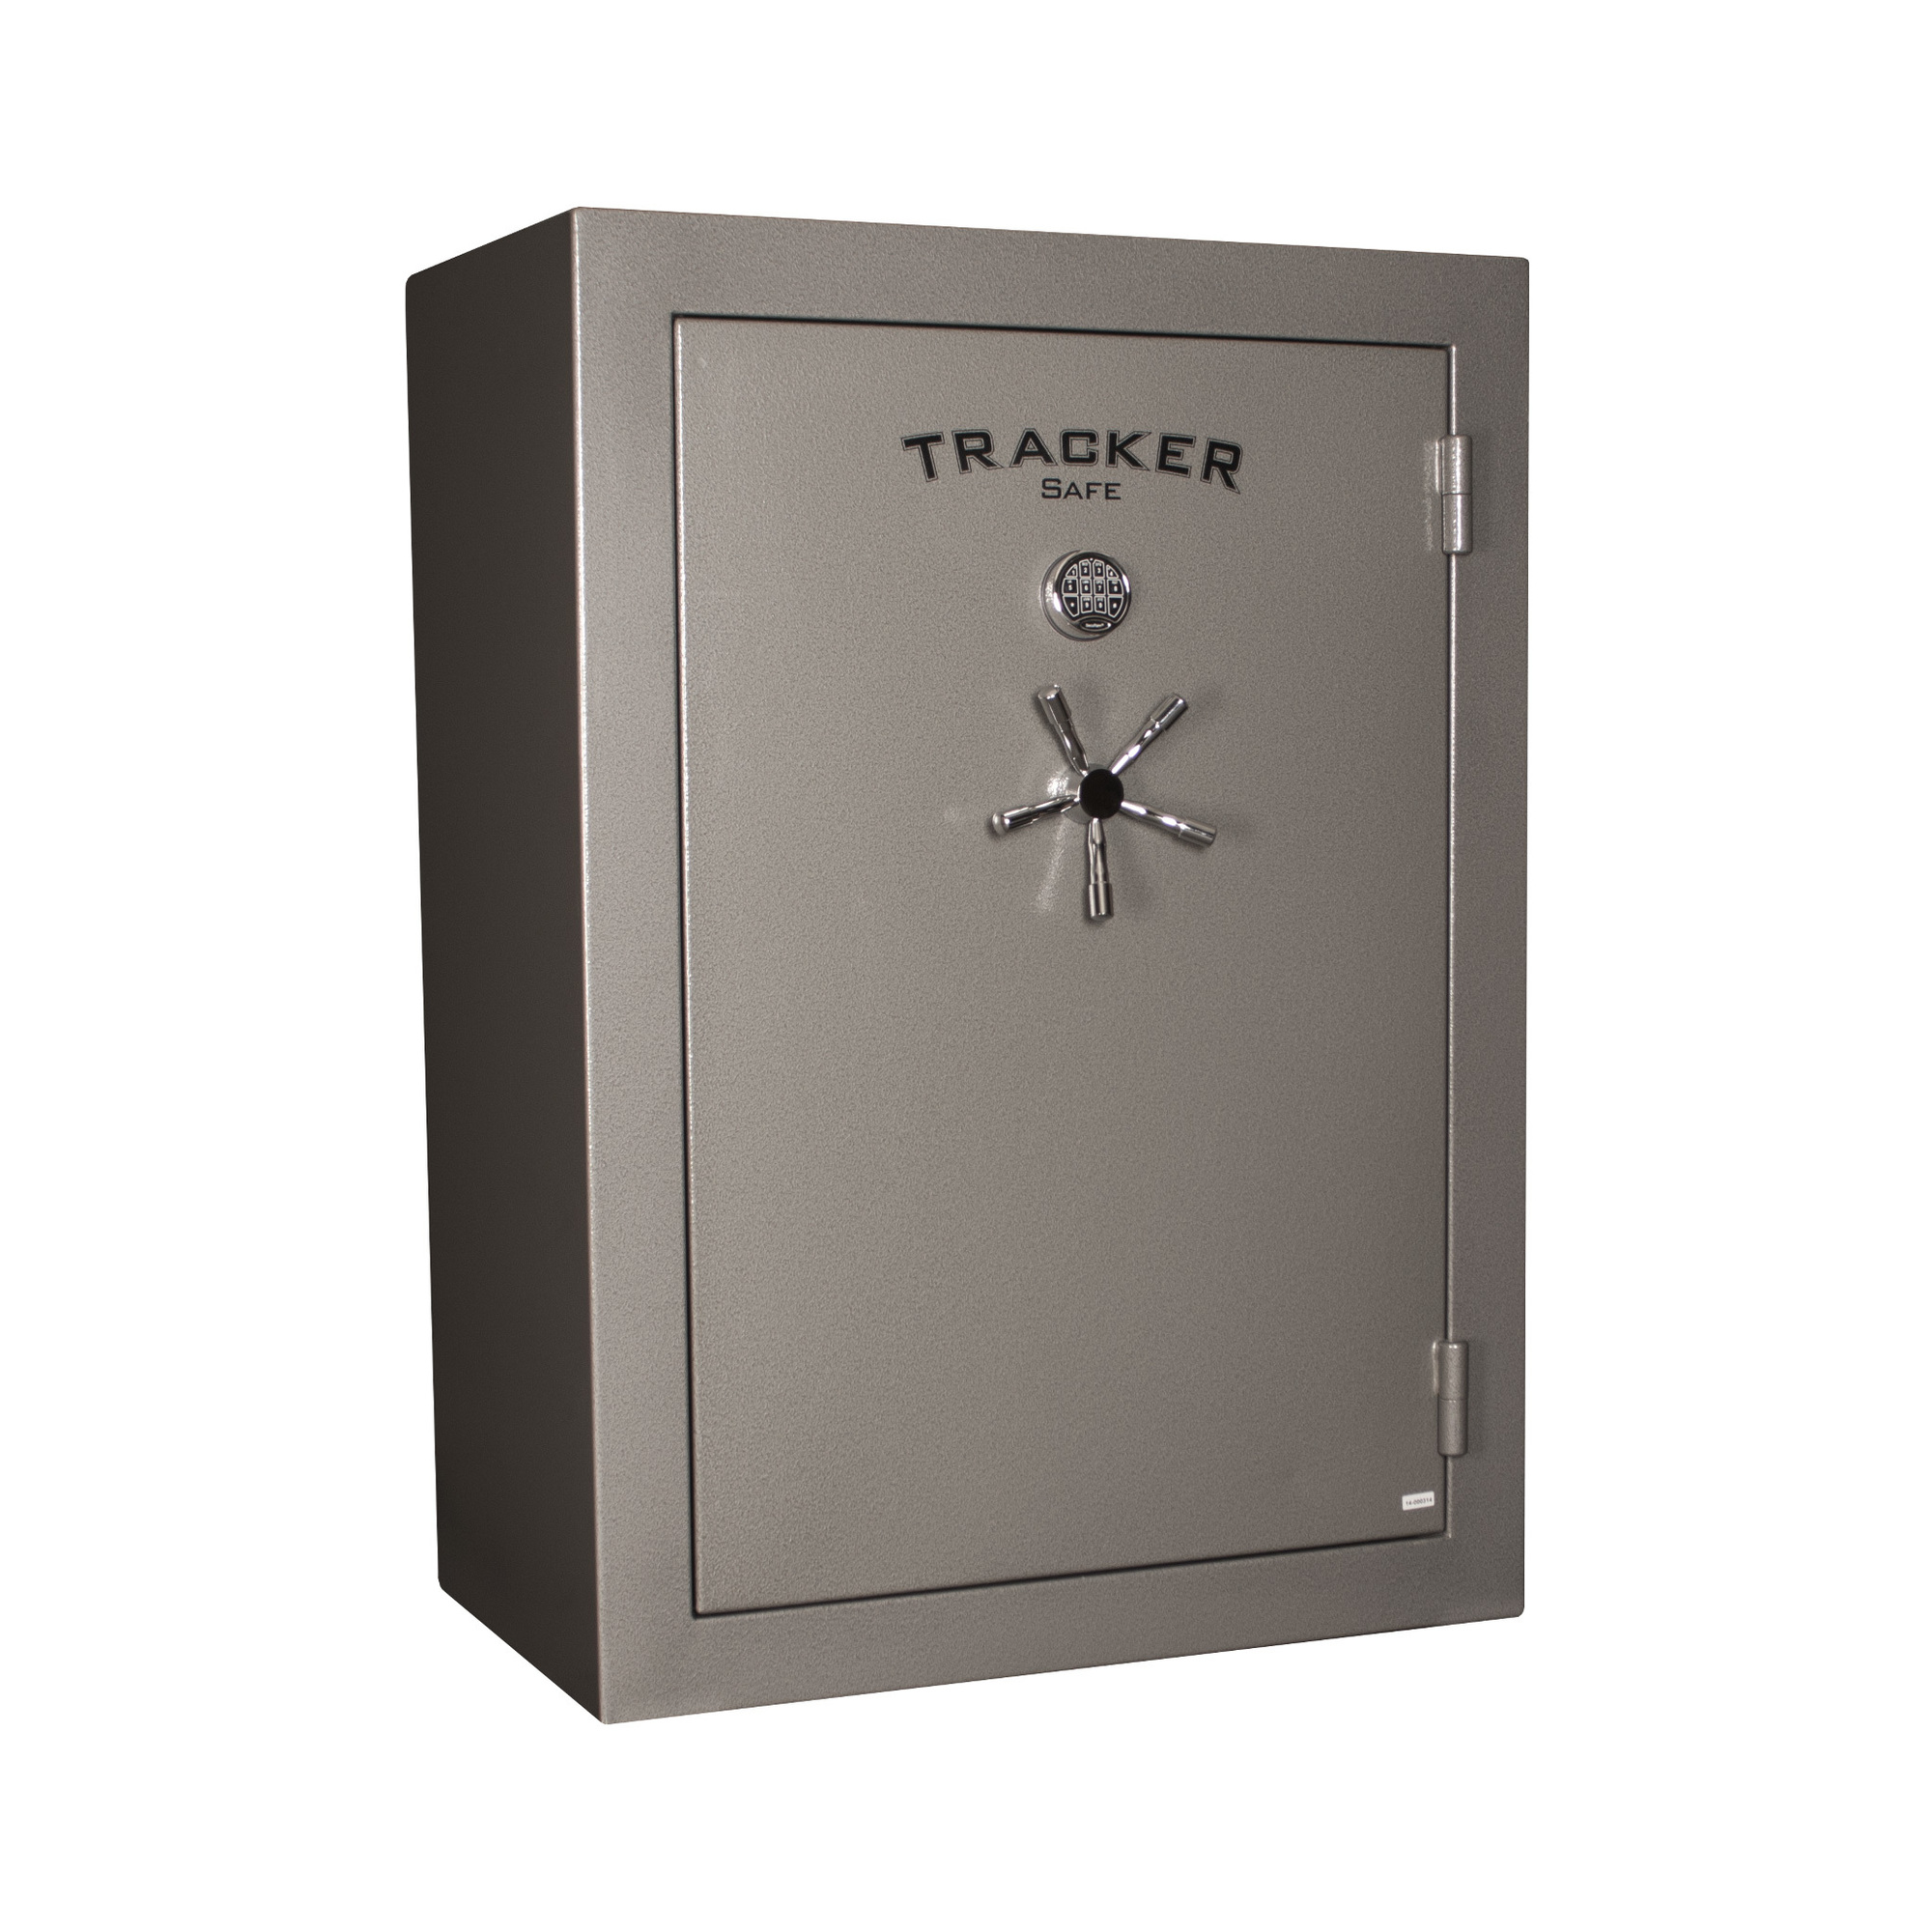 Tracker Safe, 64-Gun, 30 Min Fire Safe, Electronicl Lock, Lock Type Electronic, Model TS64